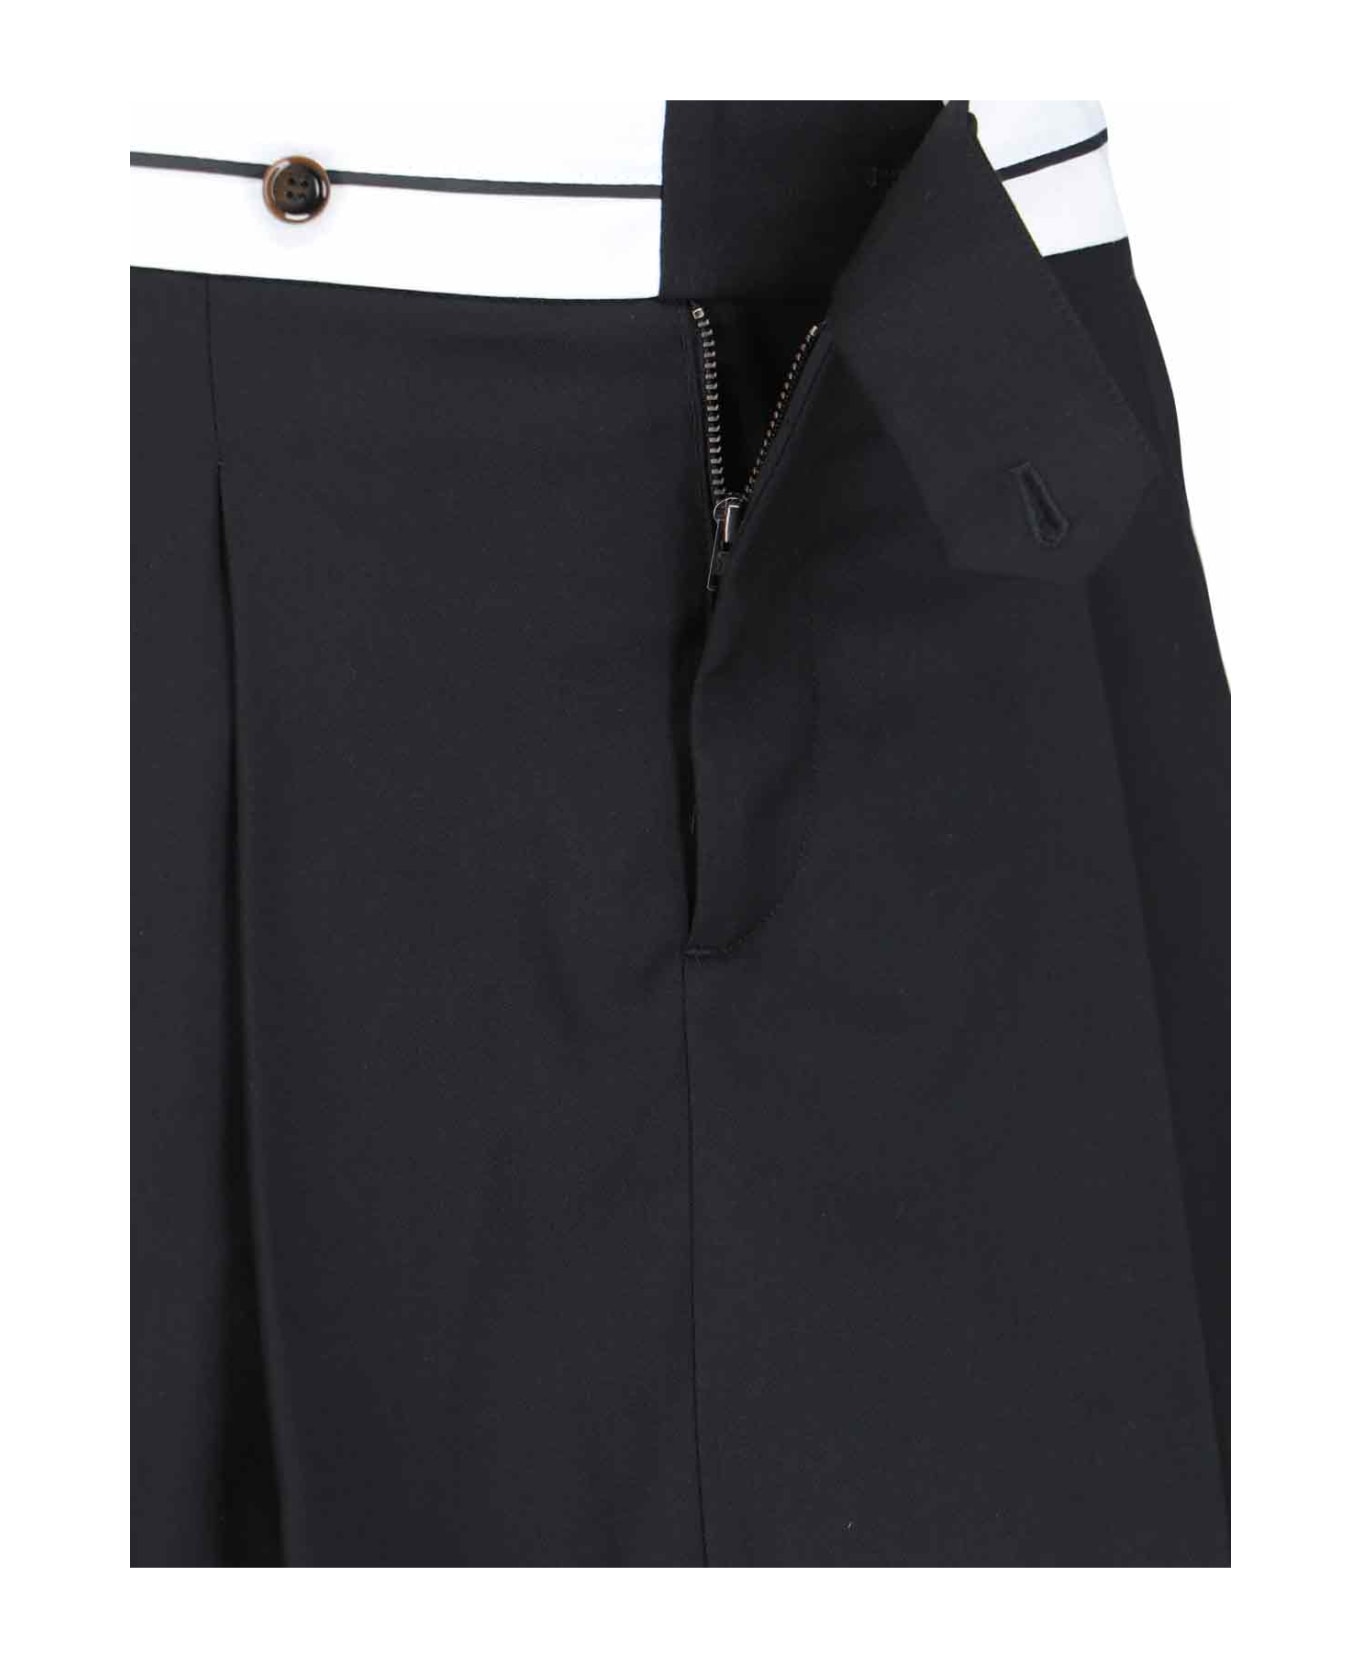 The Garment Mini Skirt "pluto" - Black   スカート